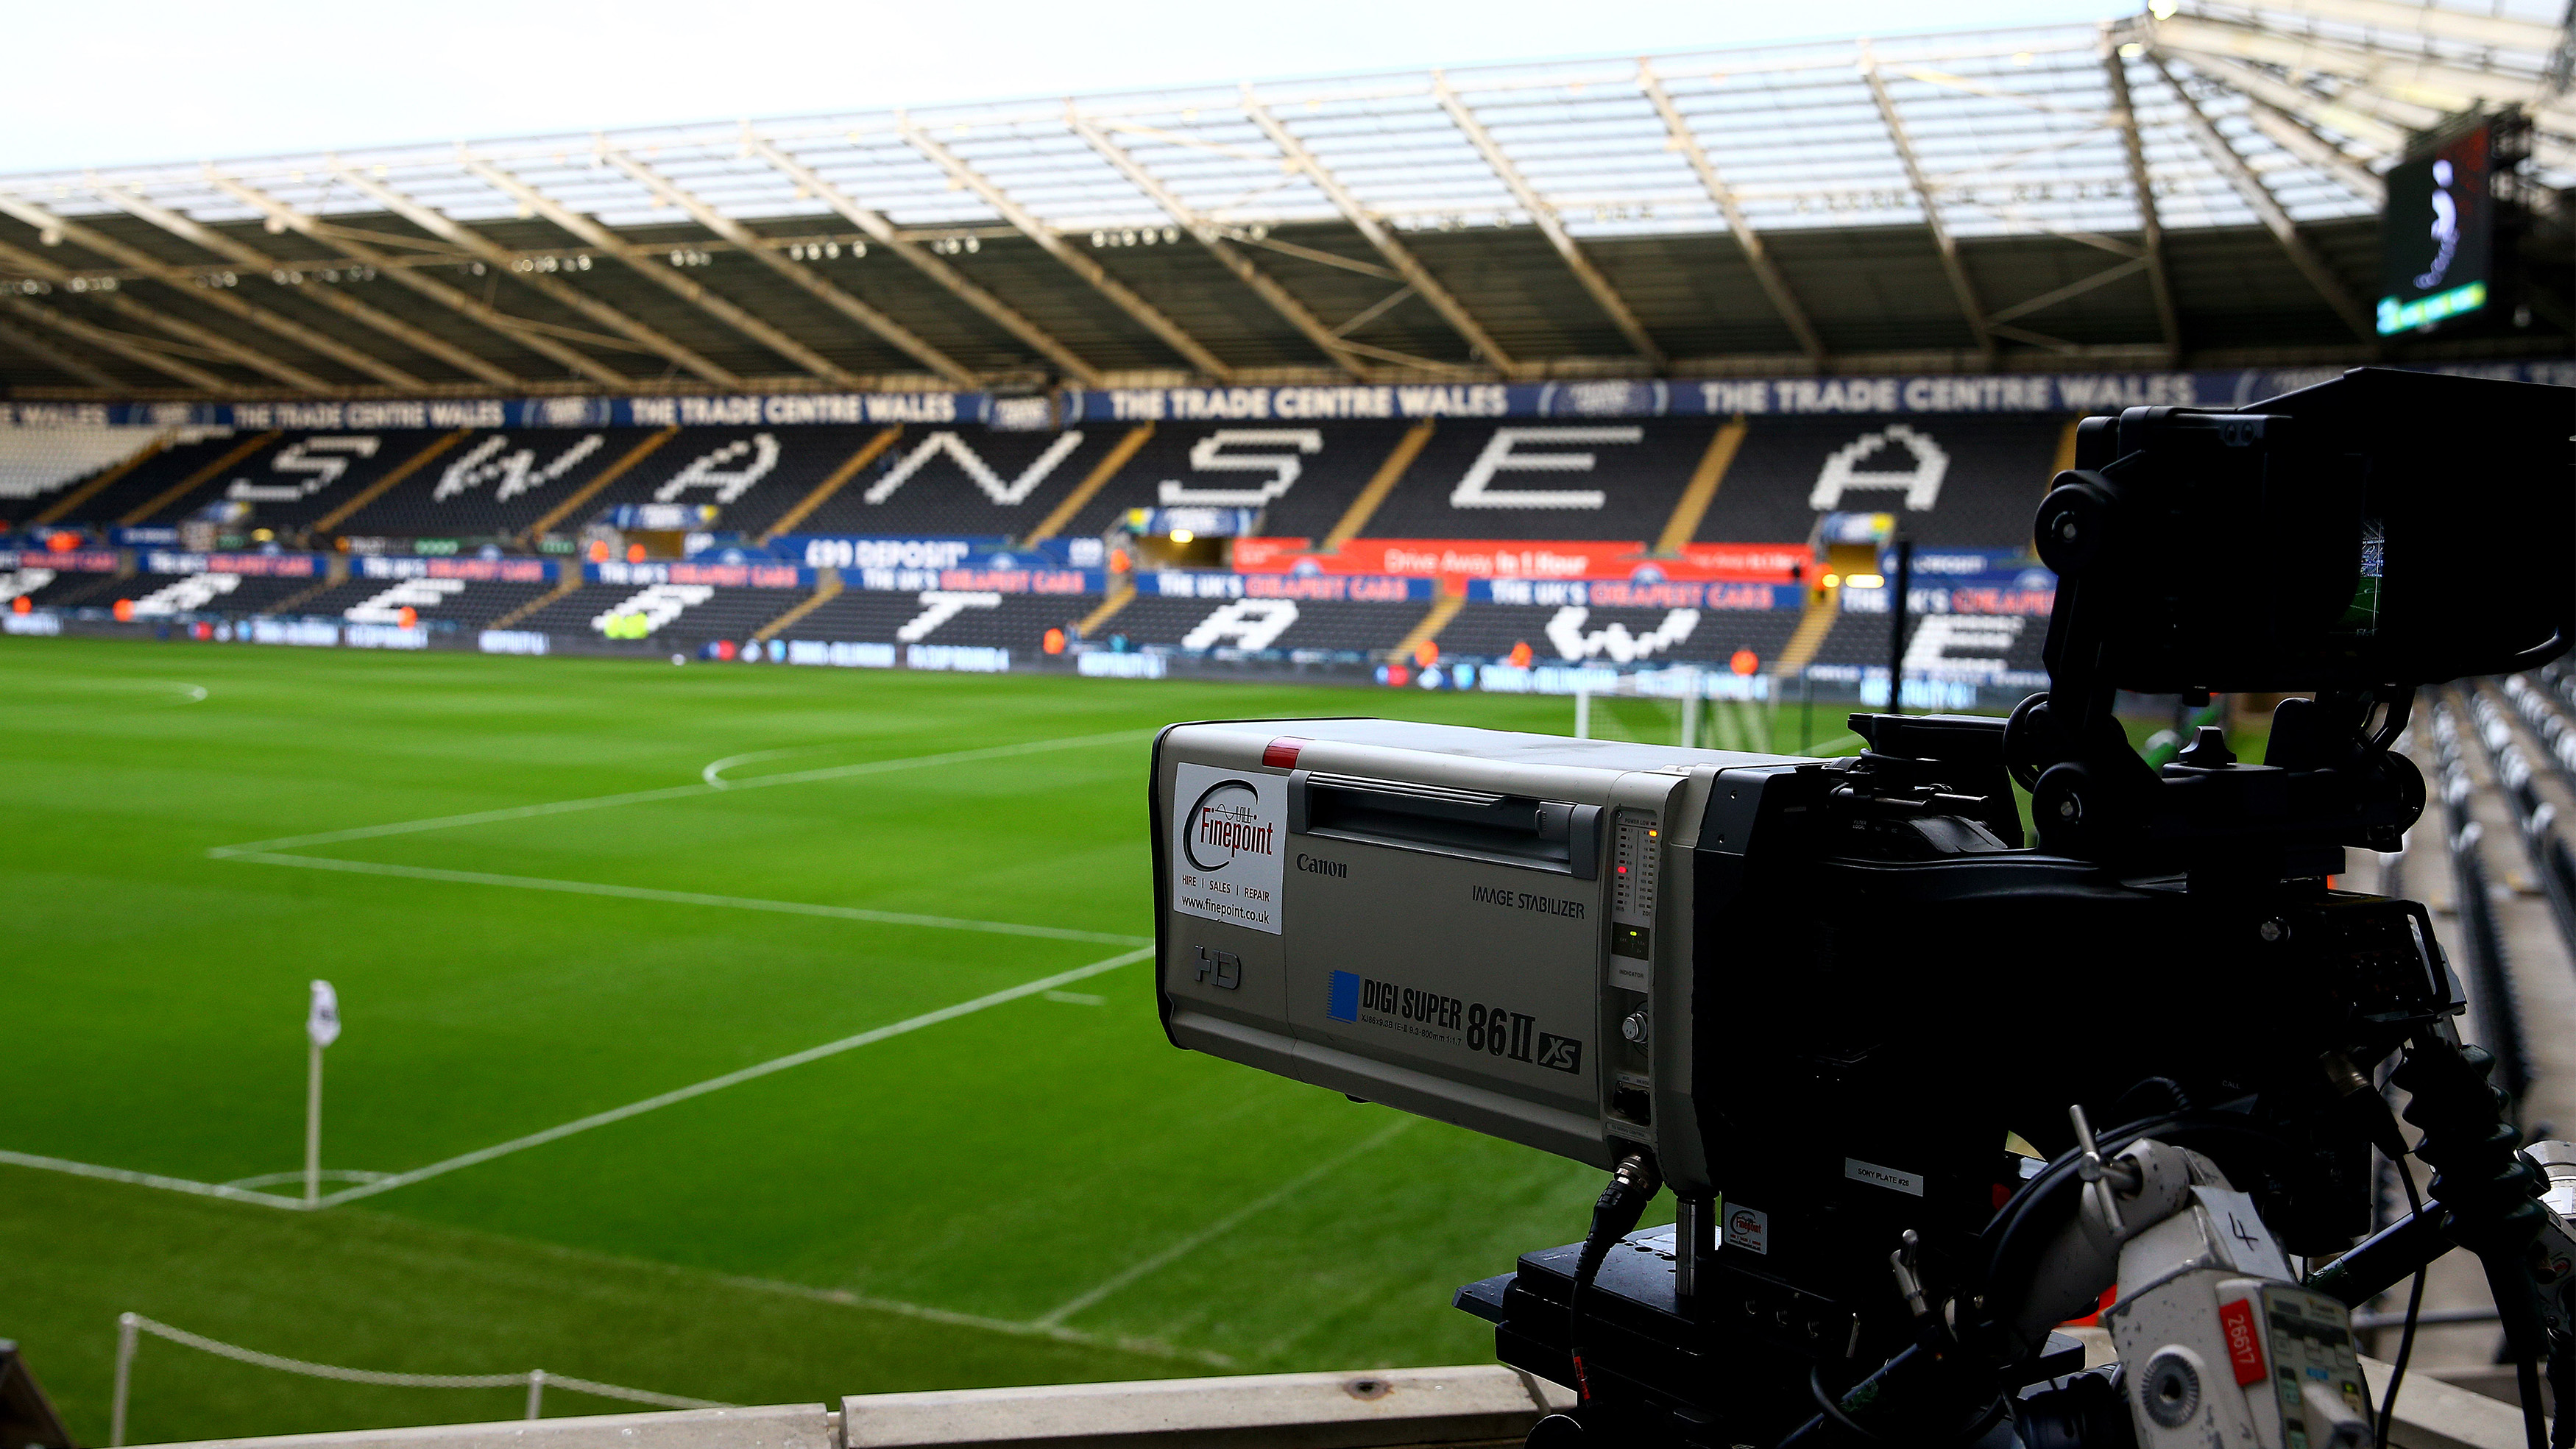 TV camera shoots across Swansea.com Stadium pitch